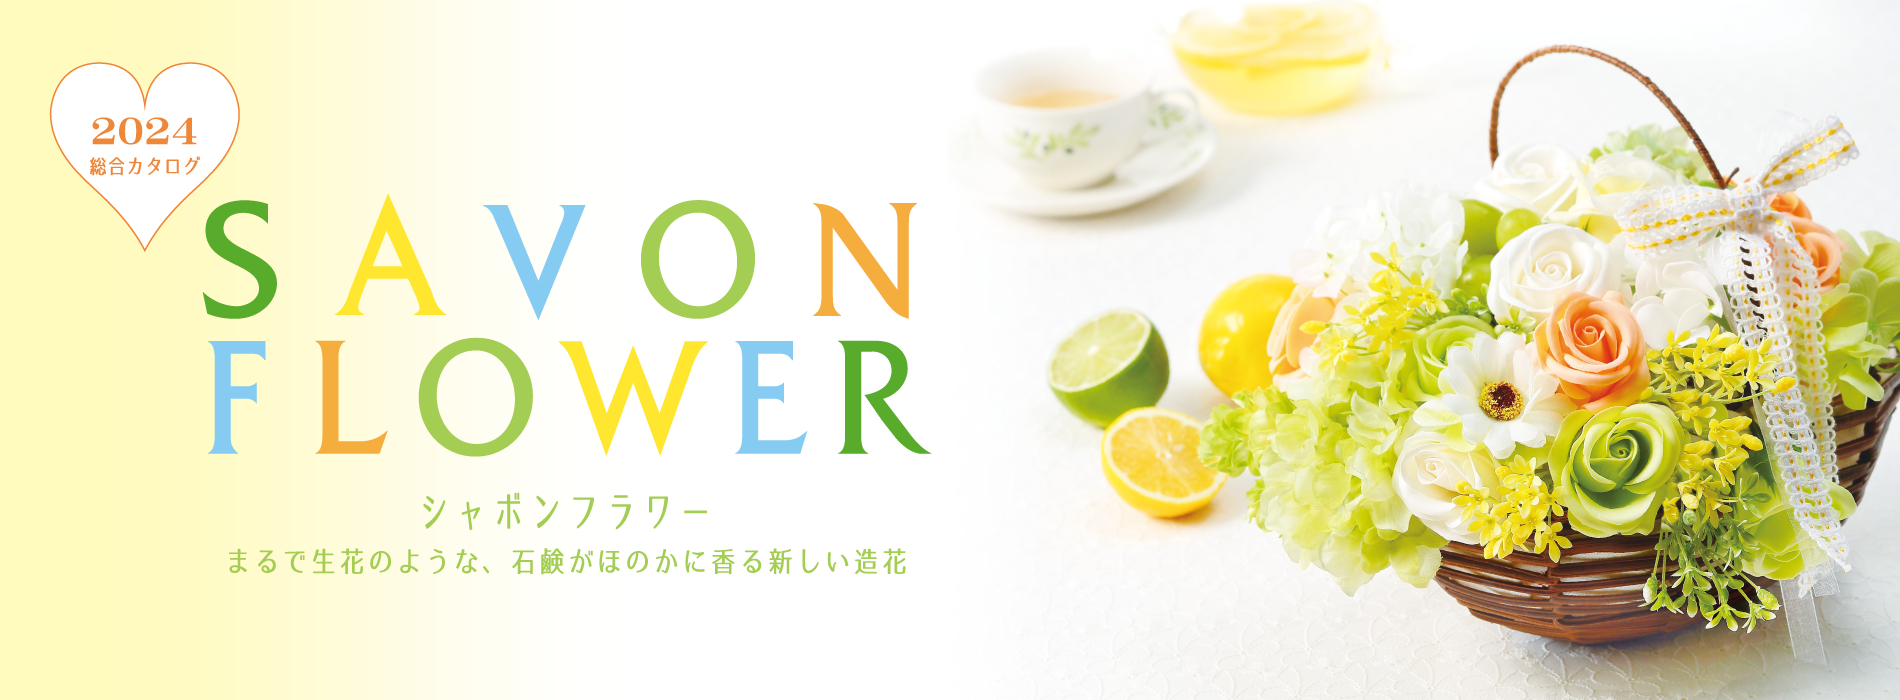 SAVON FLOWER 総合カタログ2021